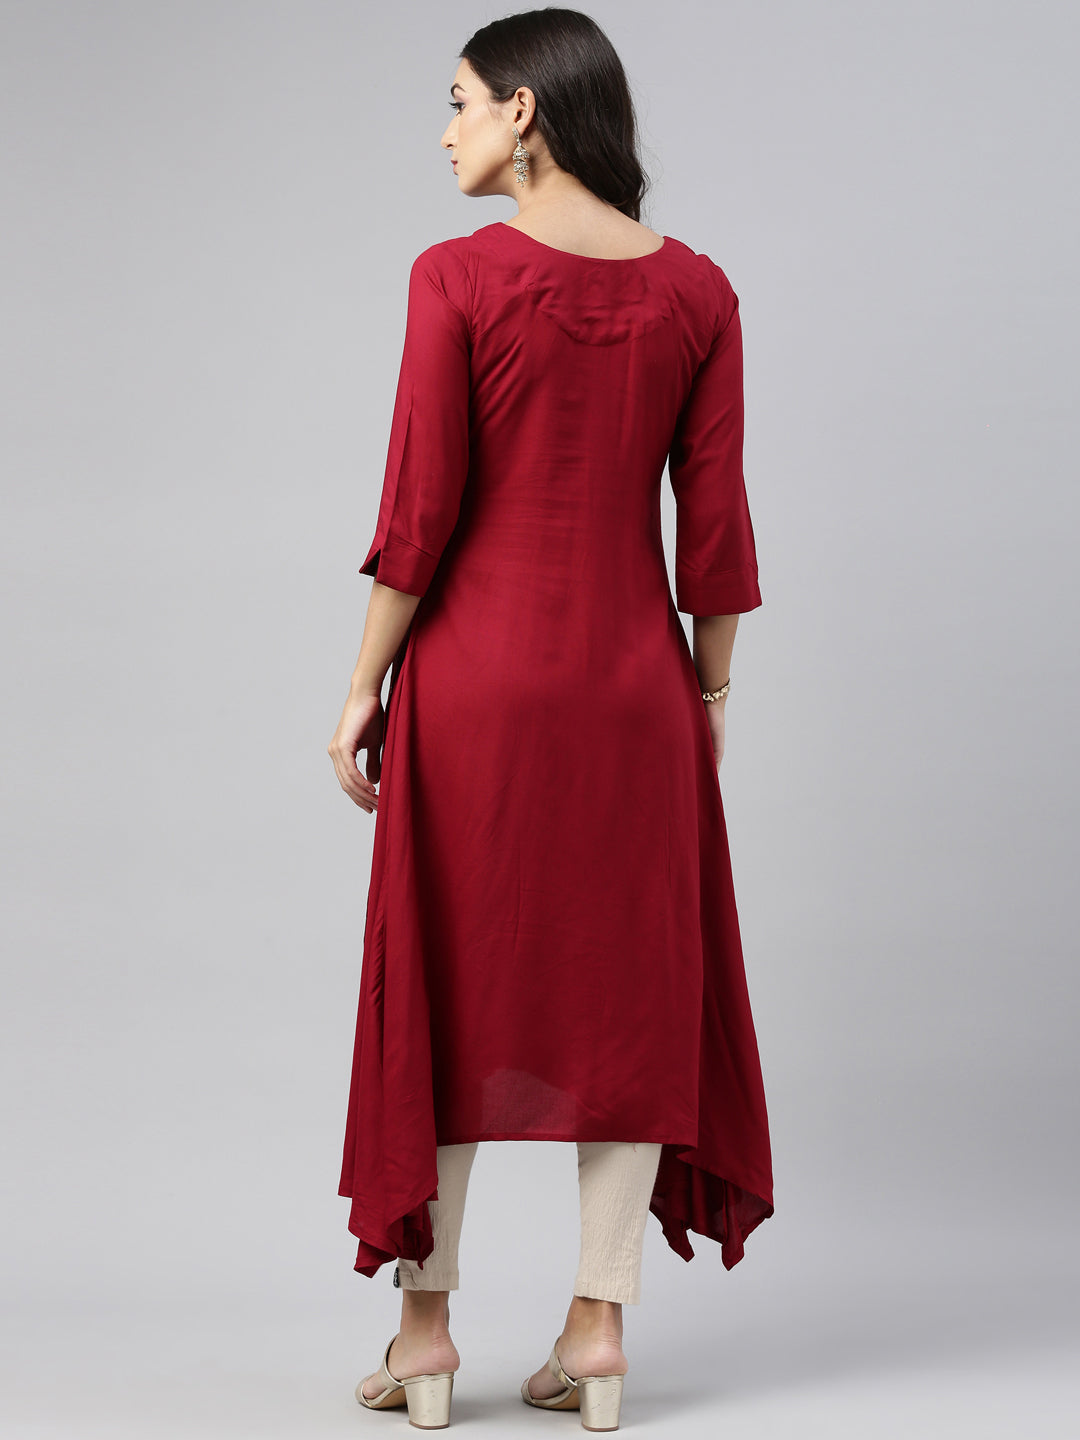 Neeru'S Maroon Color, Cotton Fabric Tunic